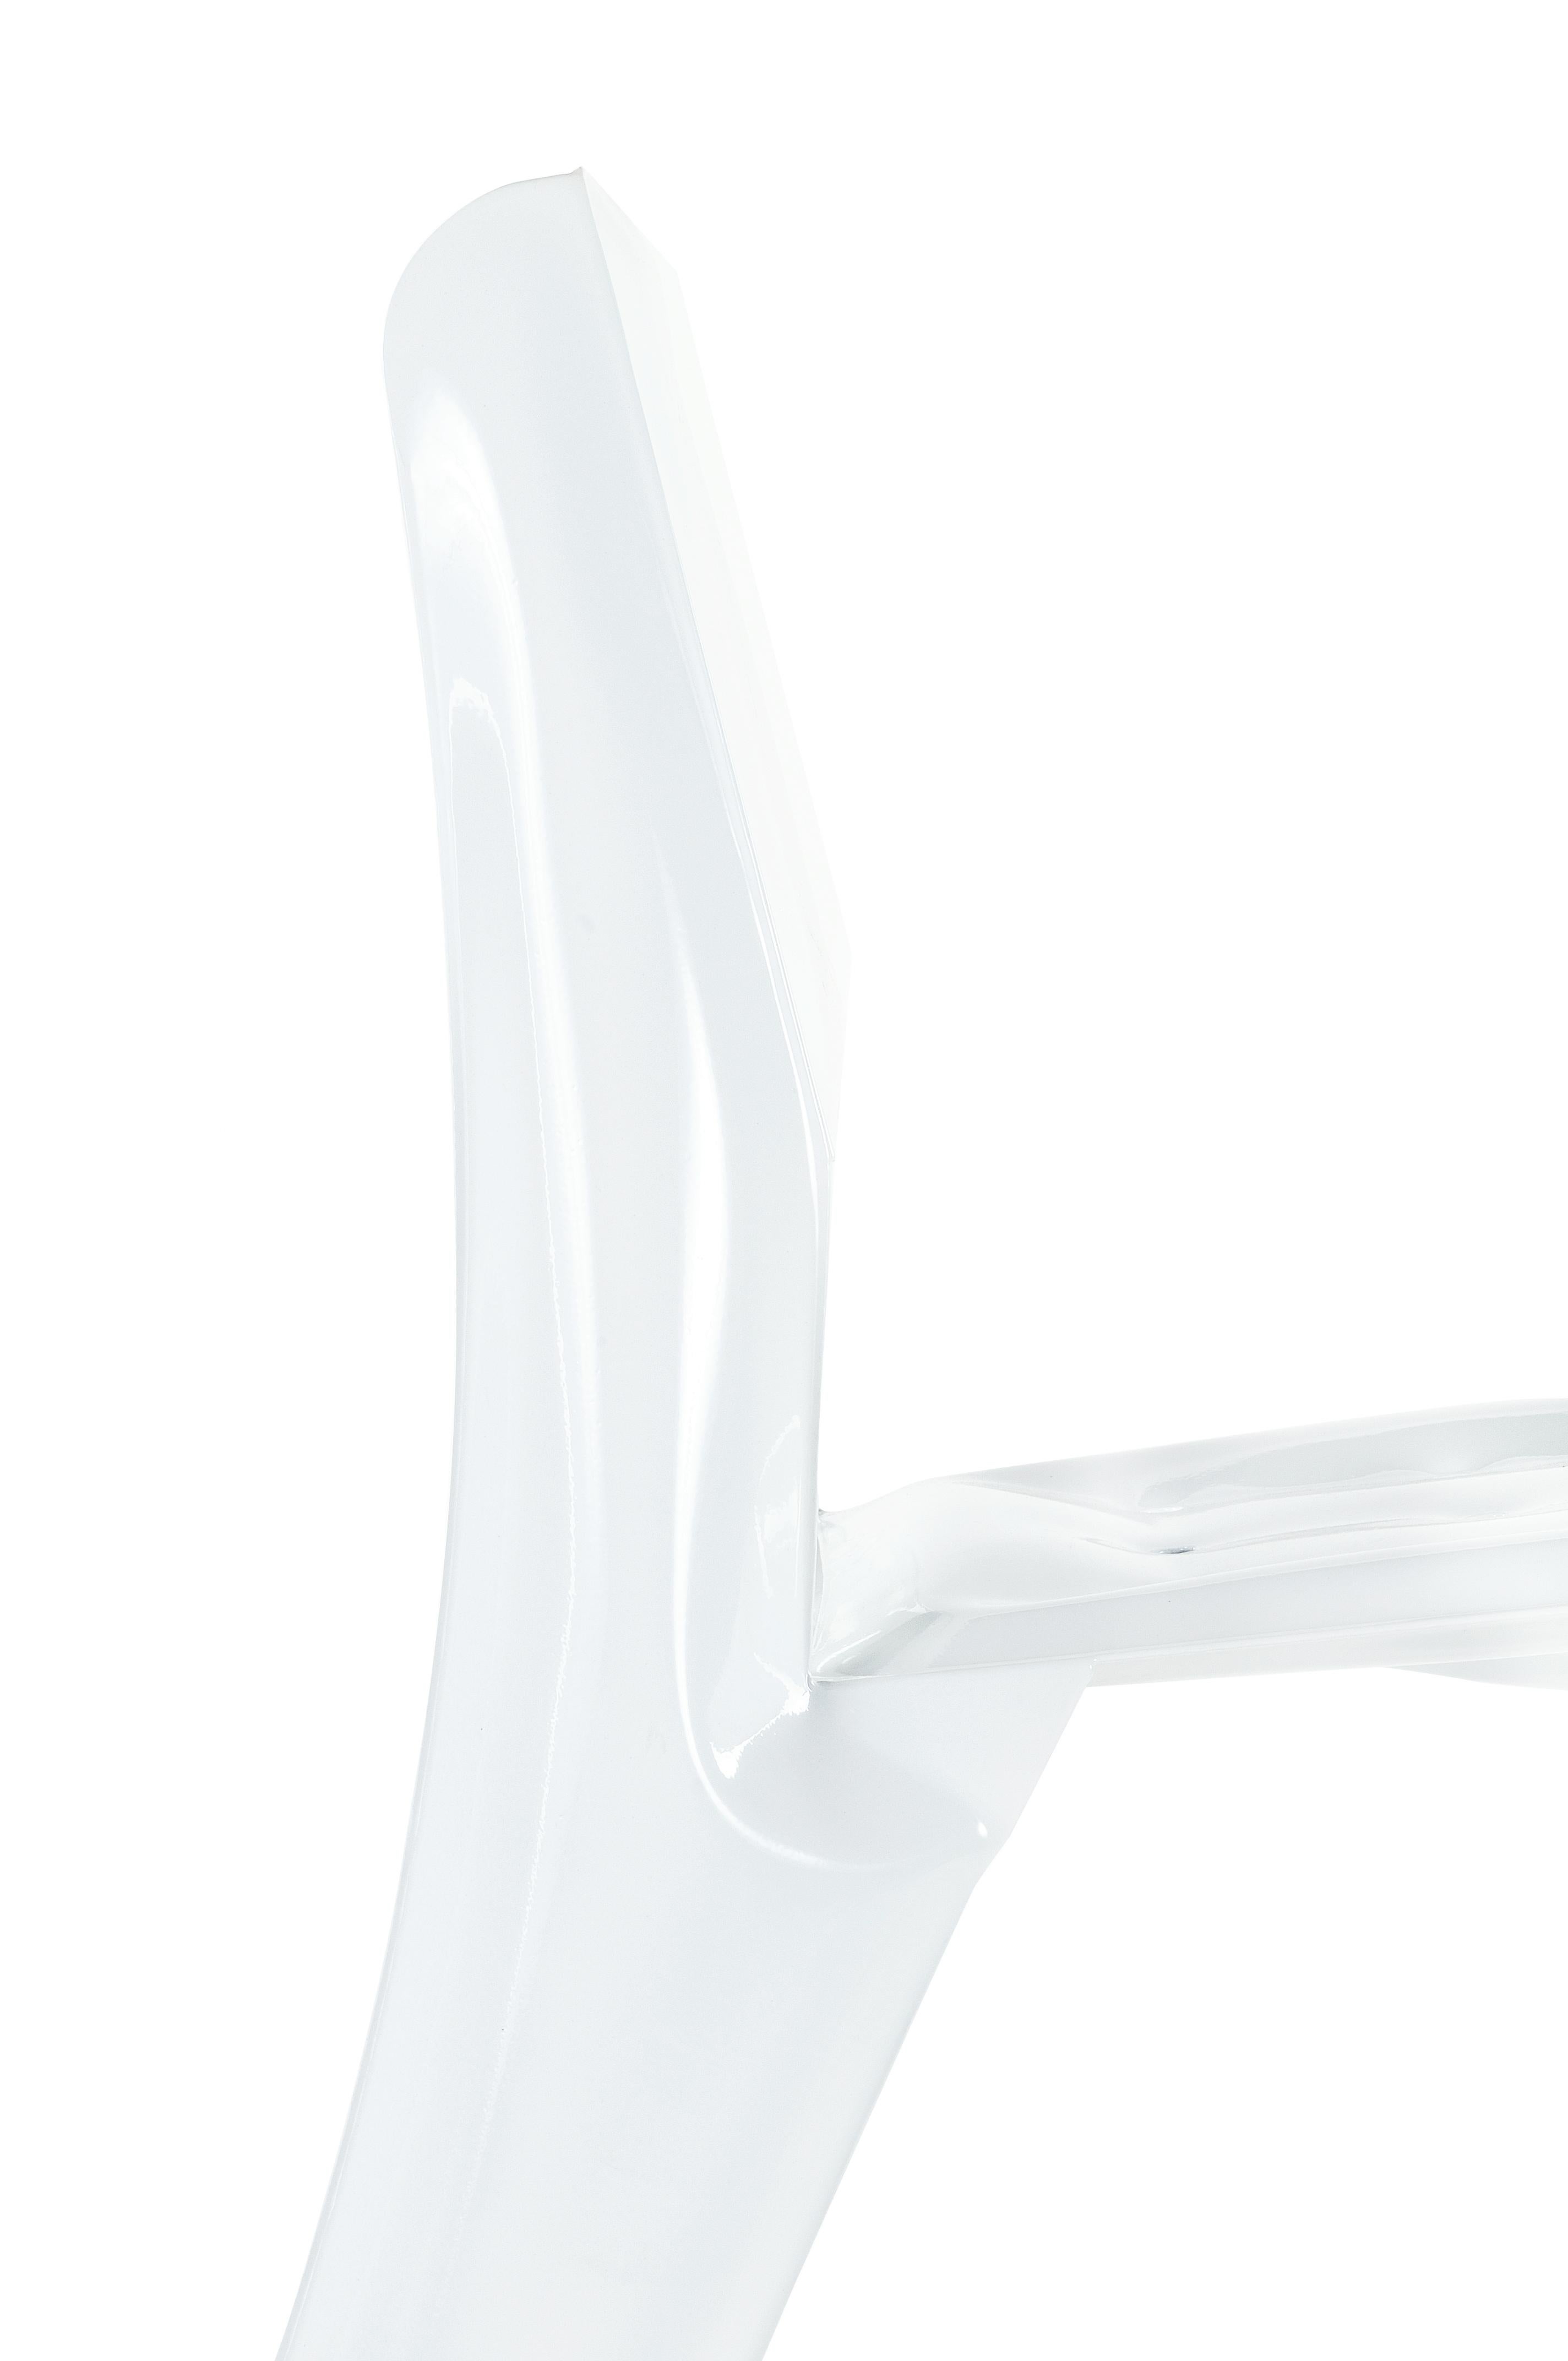 Organic Modern White Carbon Steel Chippensteel 0.5 Sculptural Chair by Zieta For Sale